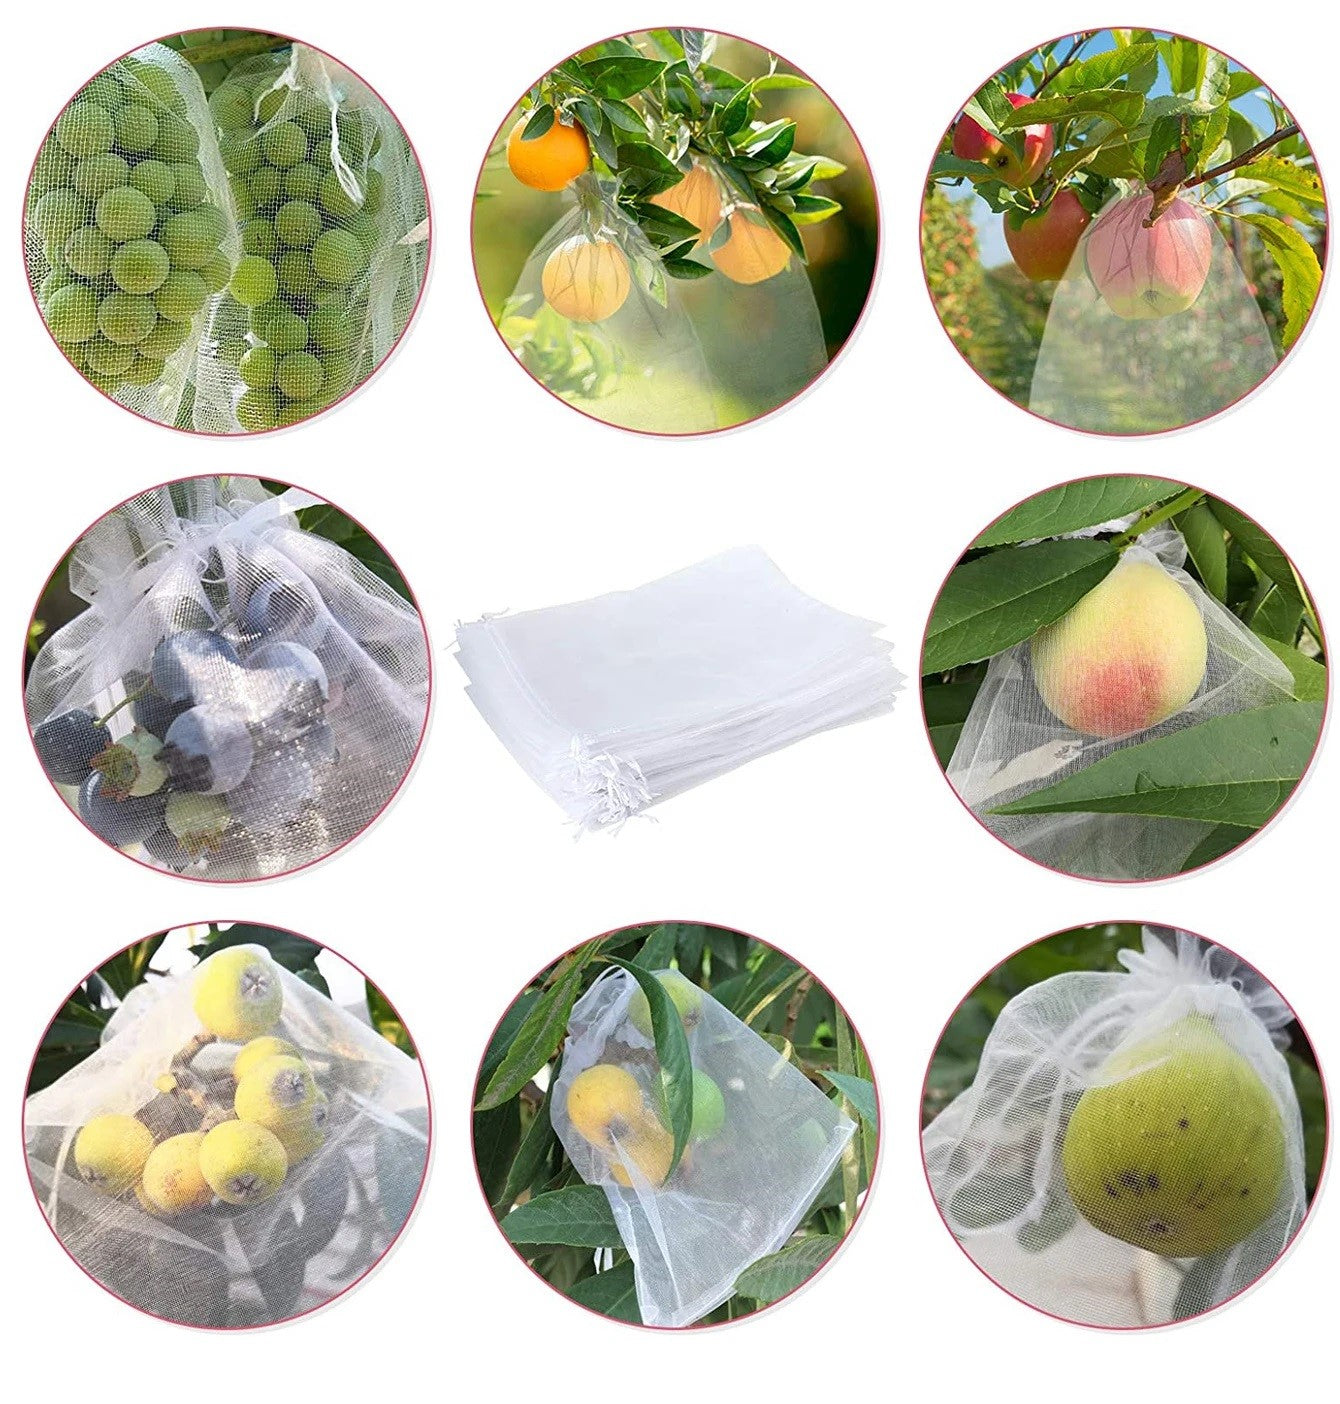 20pcs Fruit Protection Bags Anti-Bird Netting Strawberry Figs Grapes Mesh Bag